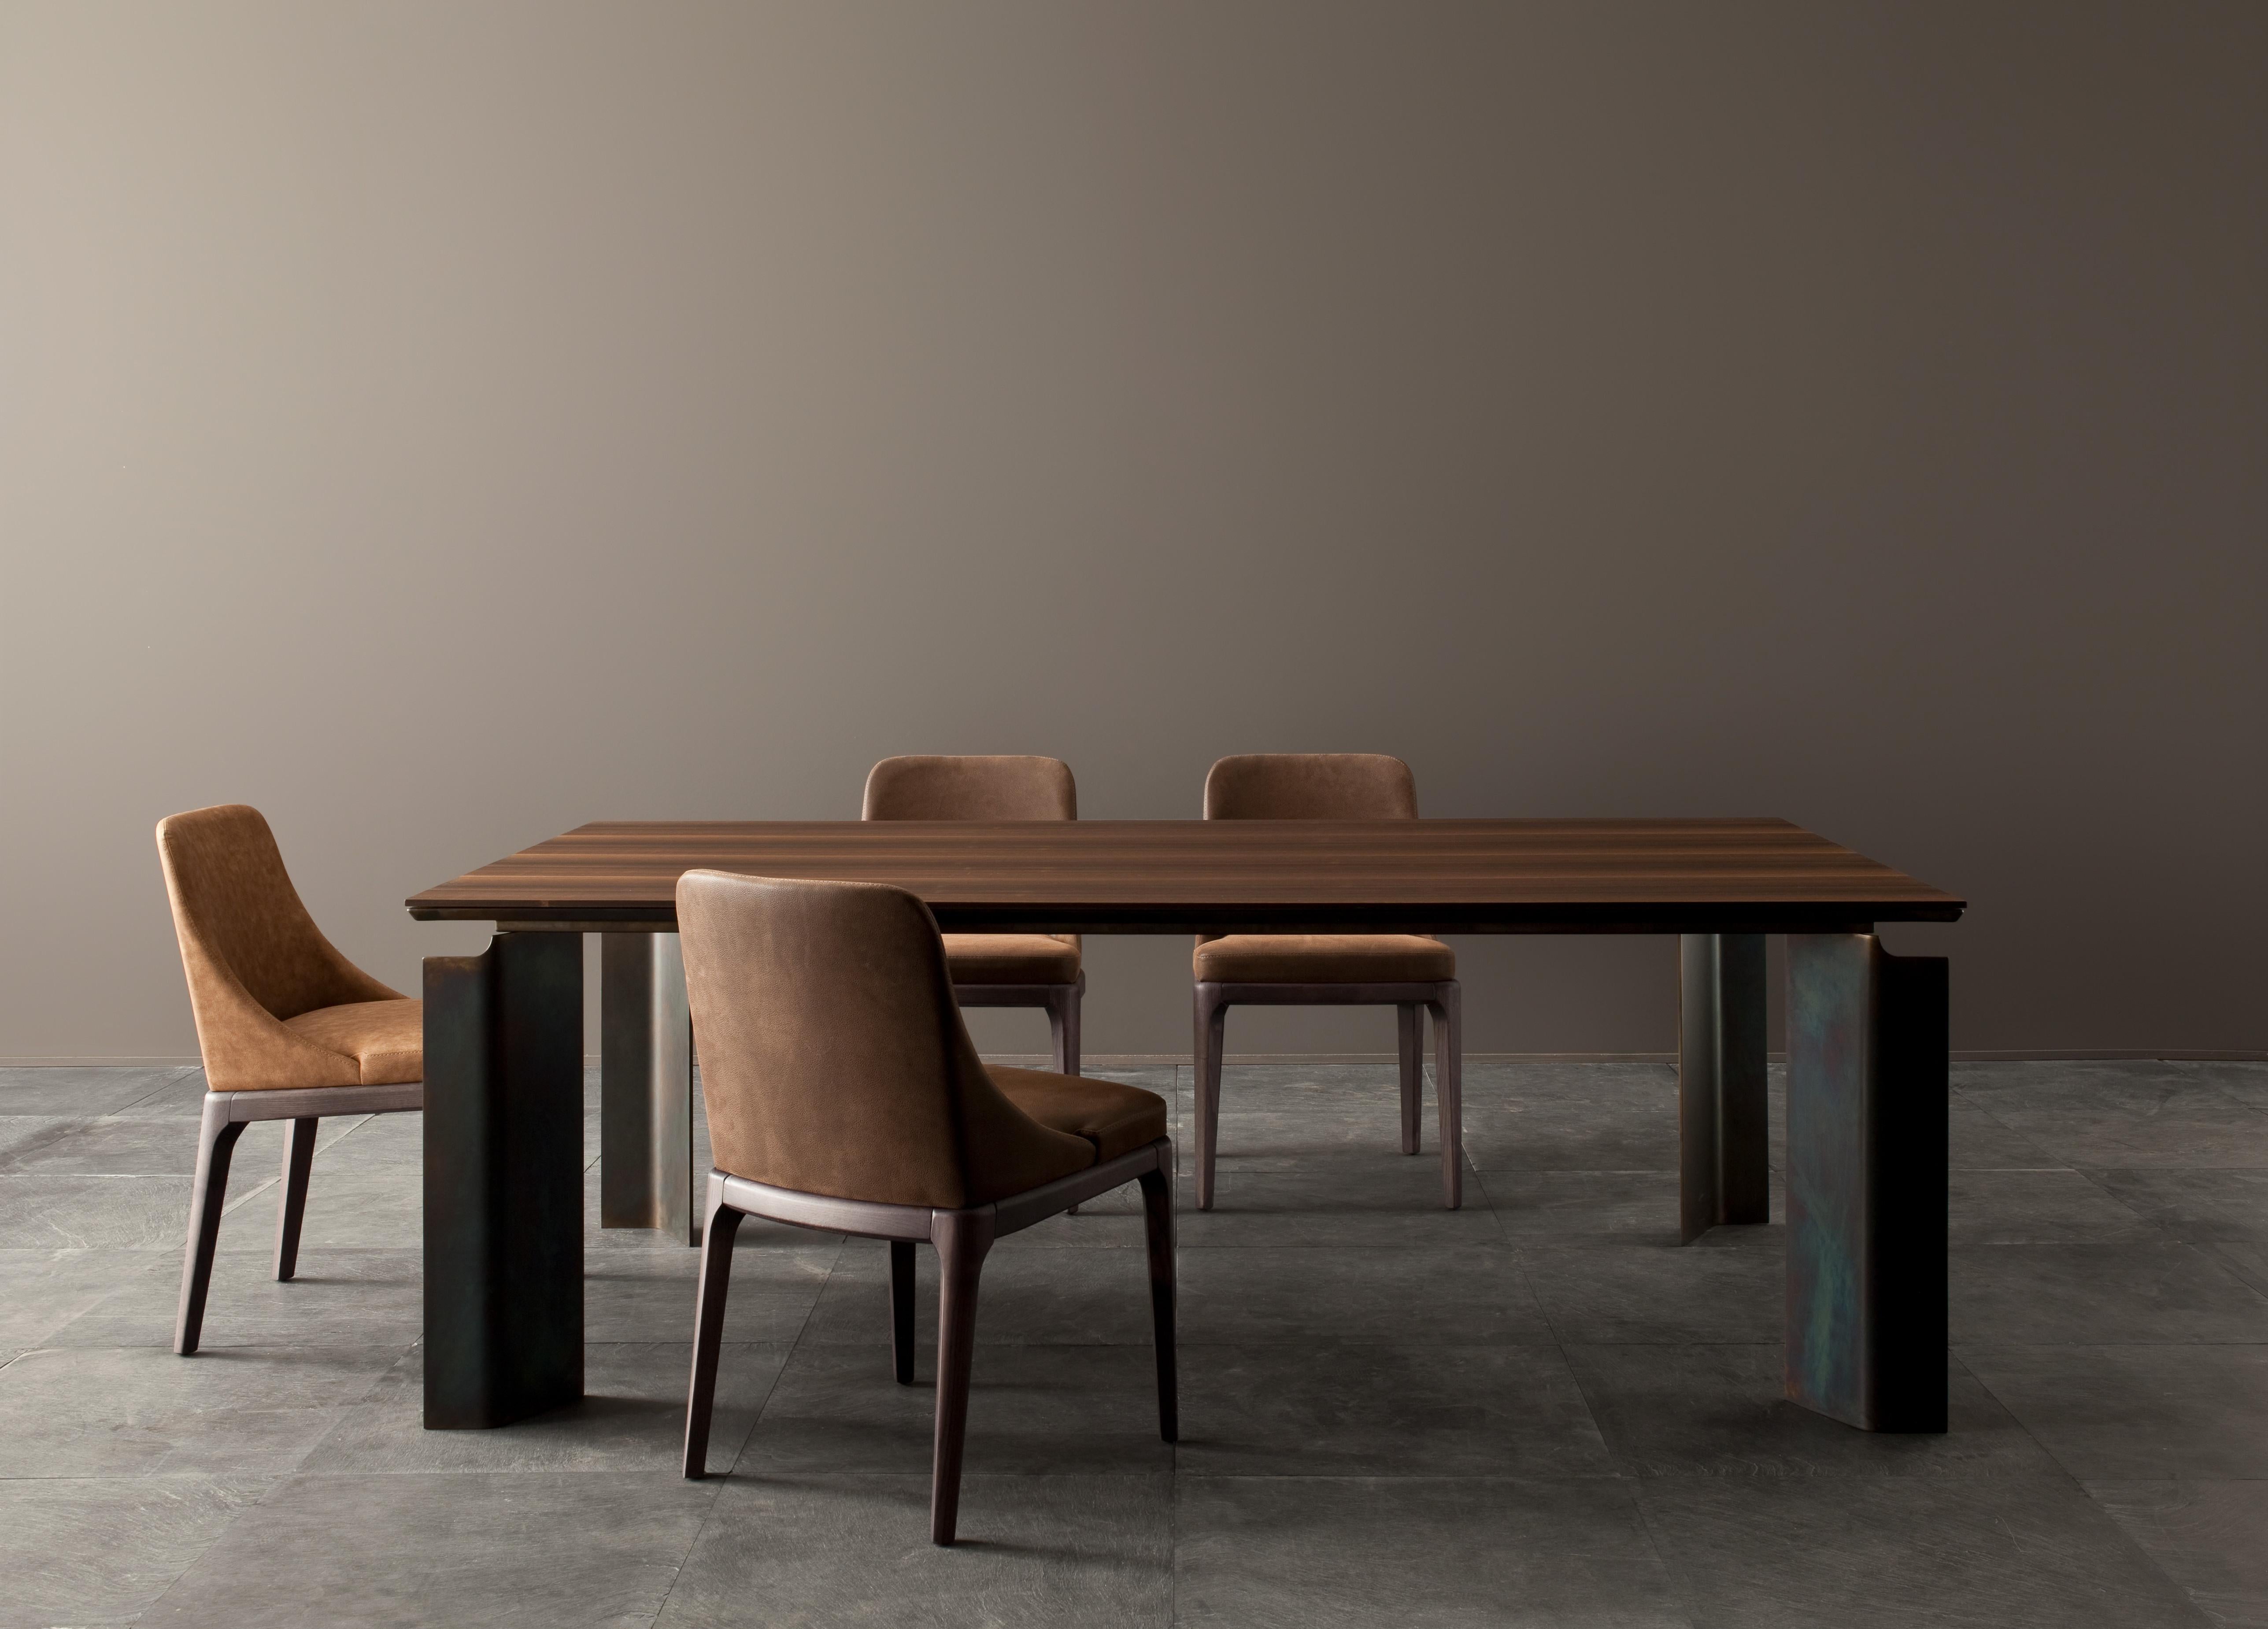 4 Contemporary Studio Tecnico Interna8 4 Chairs Wood Leather In New Condition For Sale In Pordenone, IT